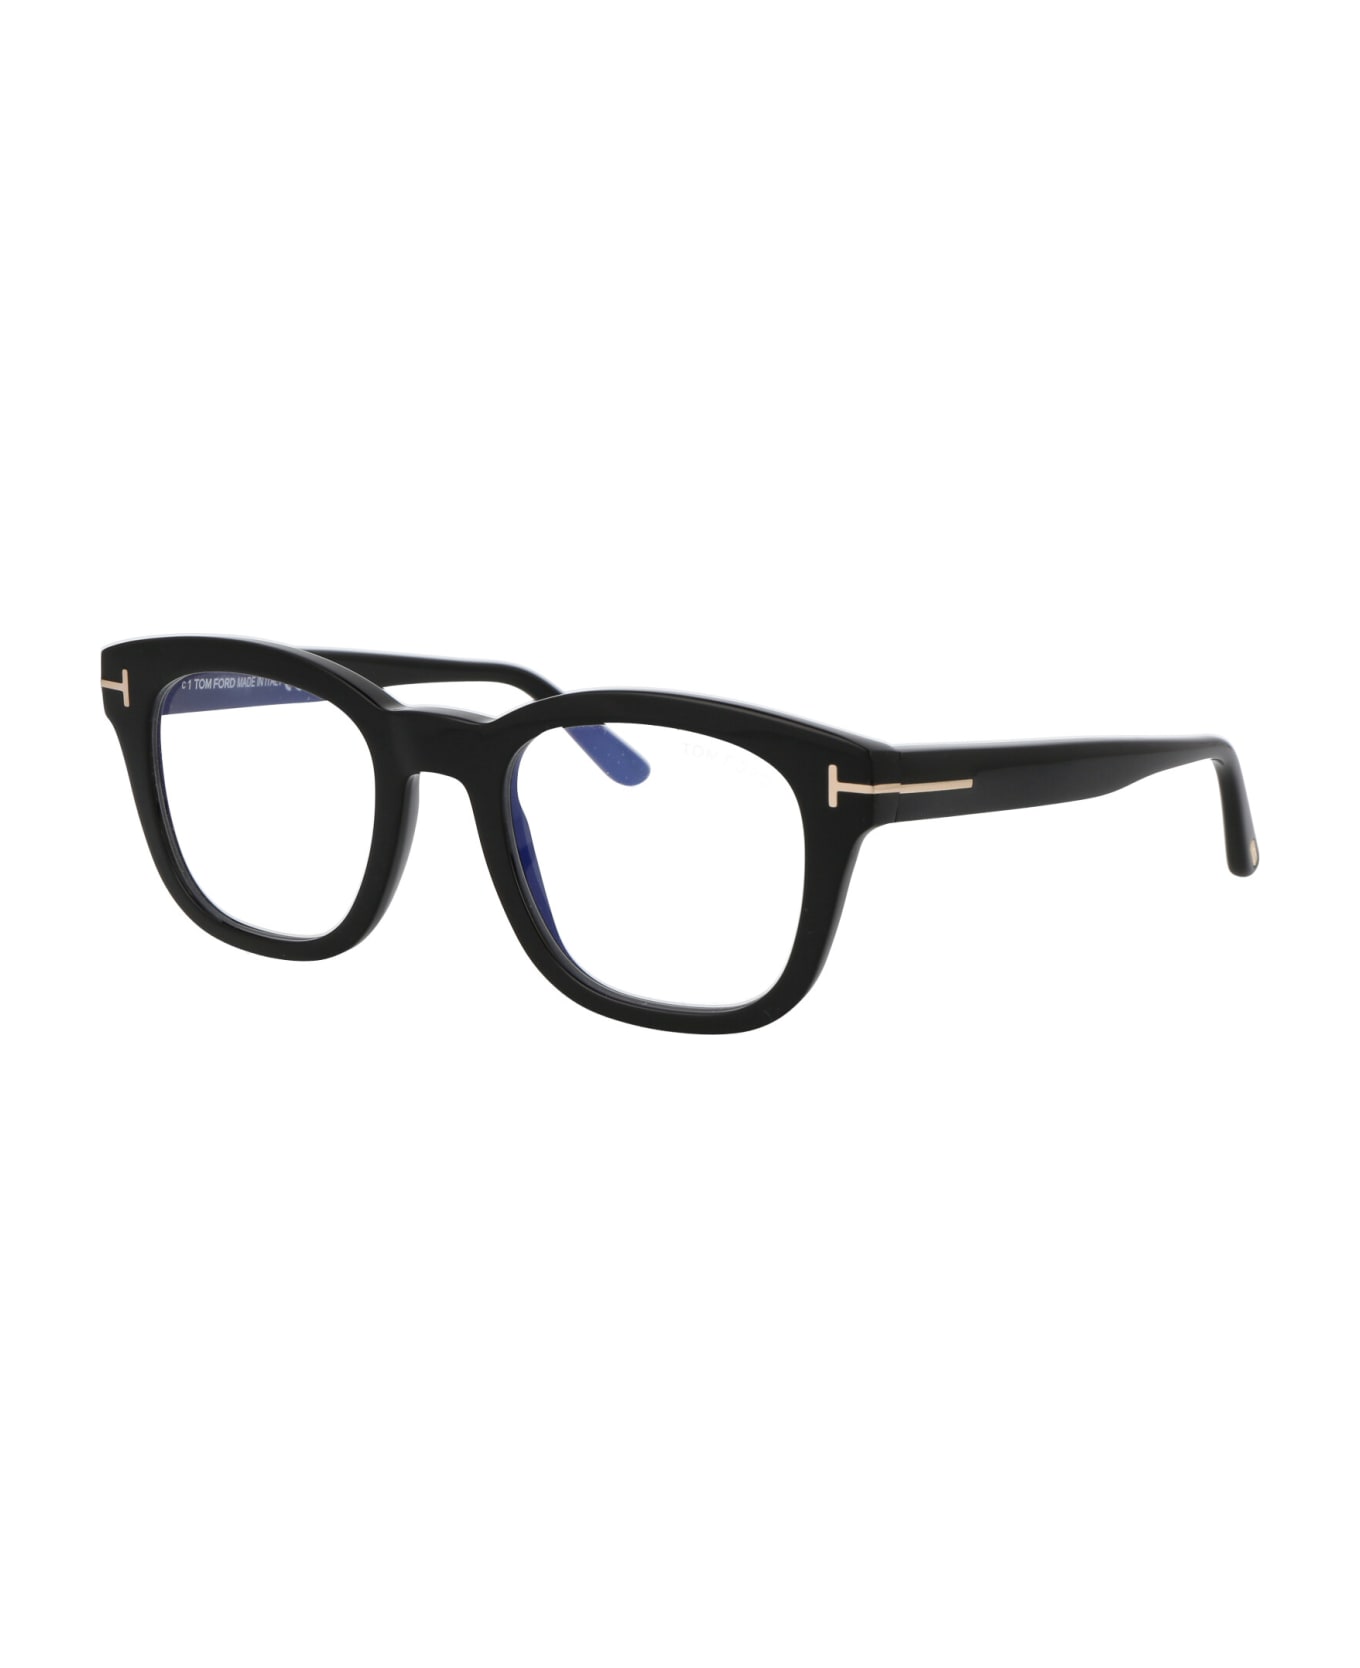 Tom Ford Eyewear Ft5542-b Glasses - 001 Nero Lucido